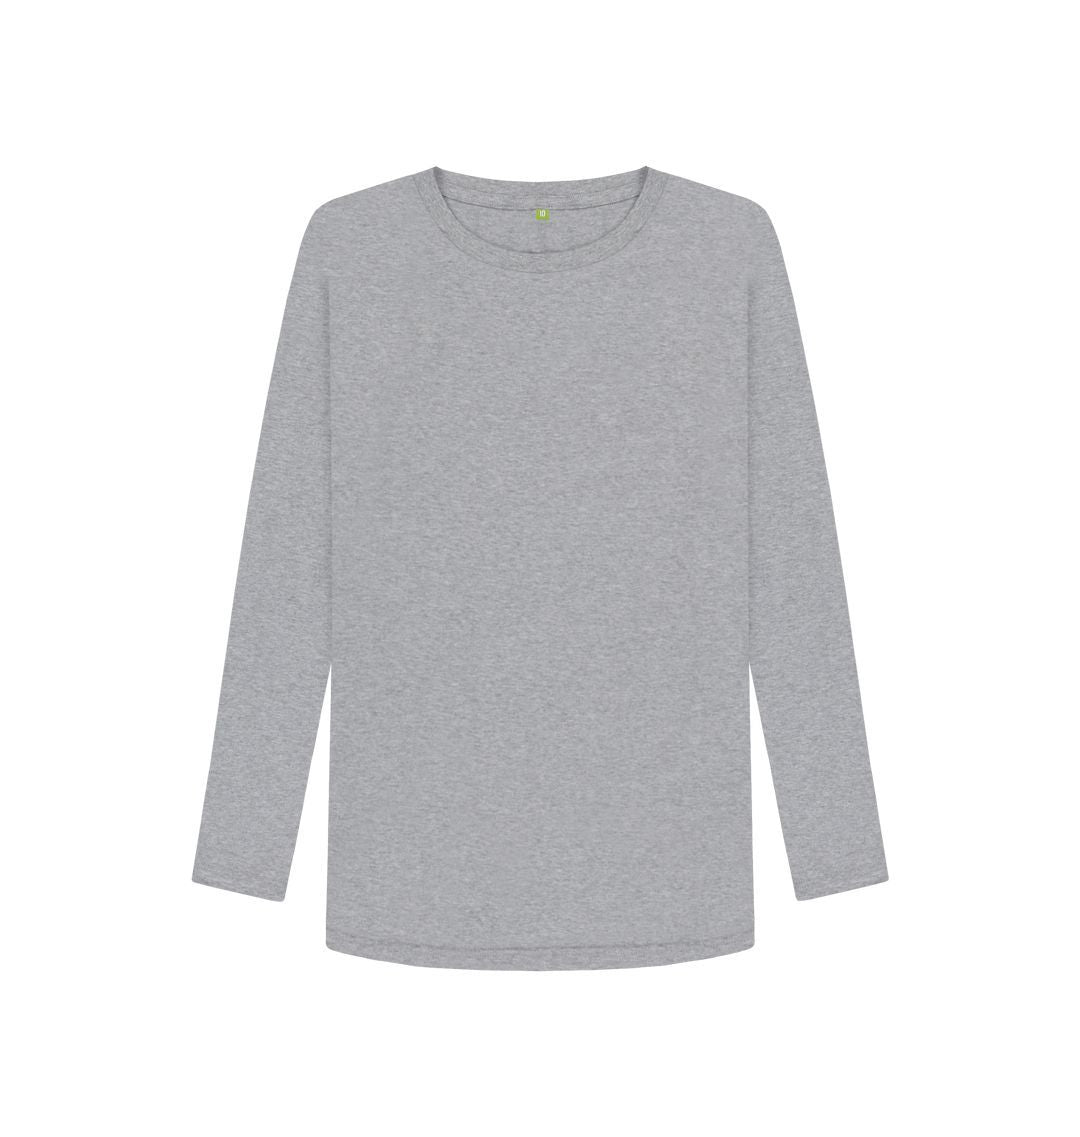 Athletic Grey Women's organic cotton long sleeve t-shirt